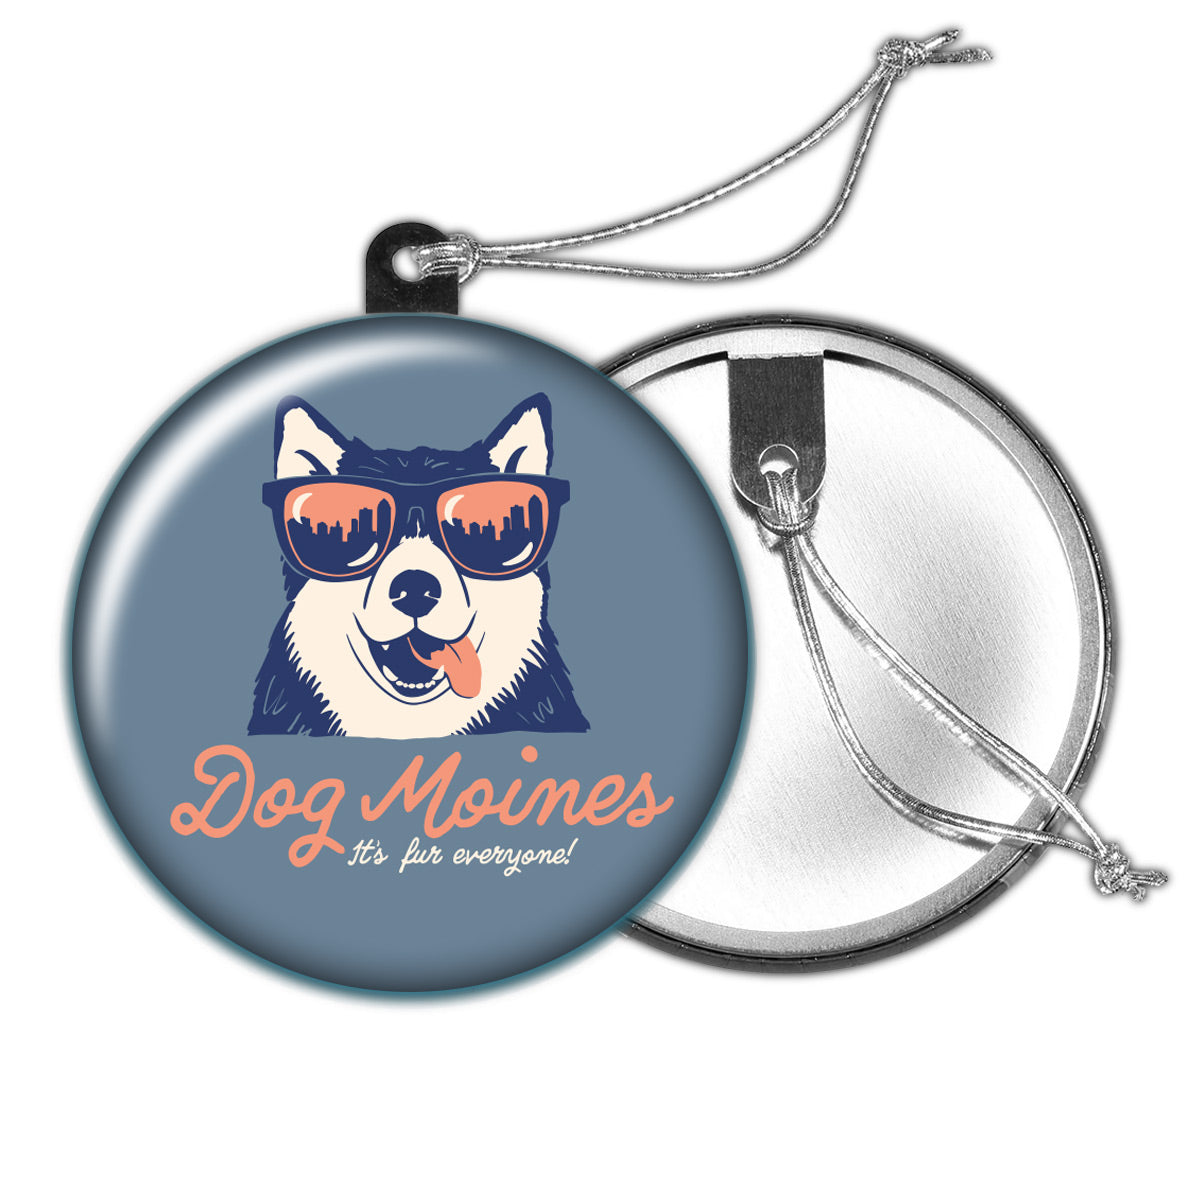 Dog Moines Holiday Ornament - Bozz Prints